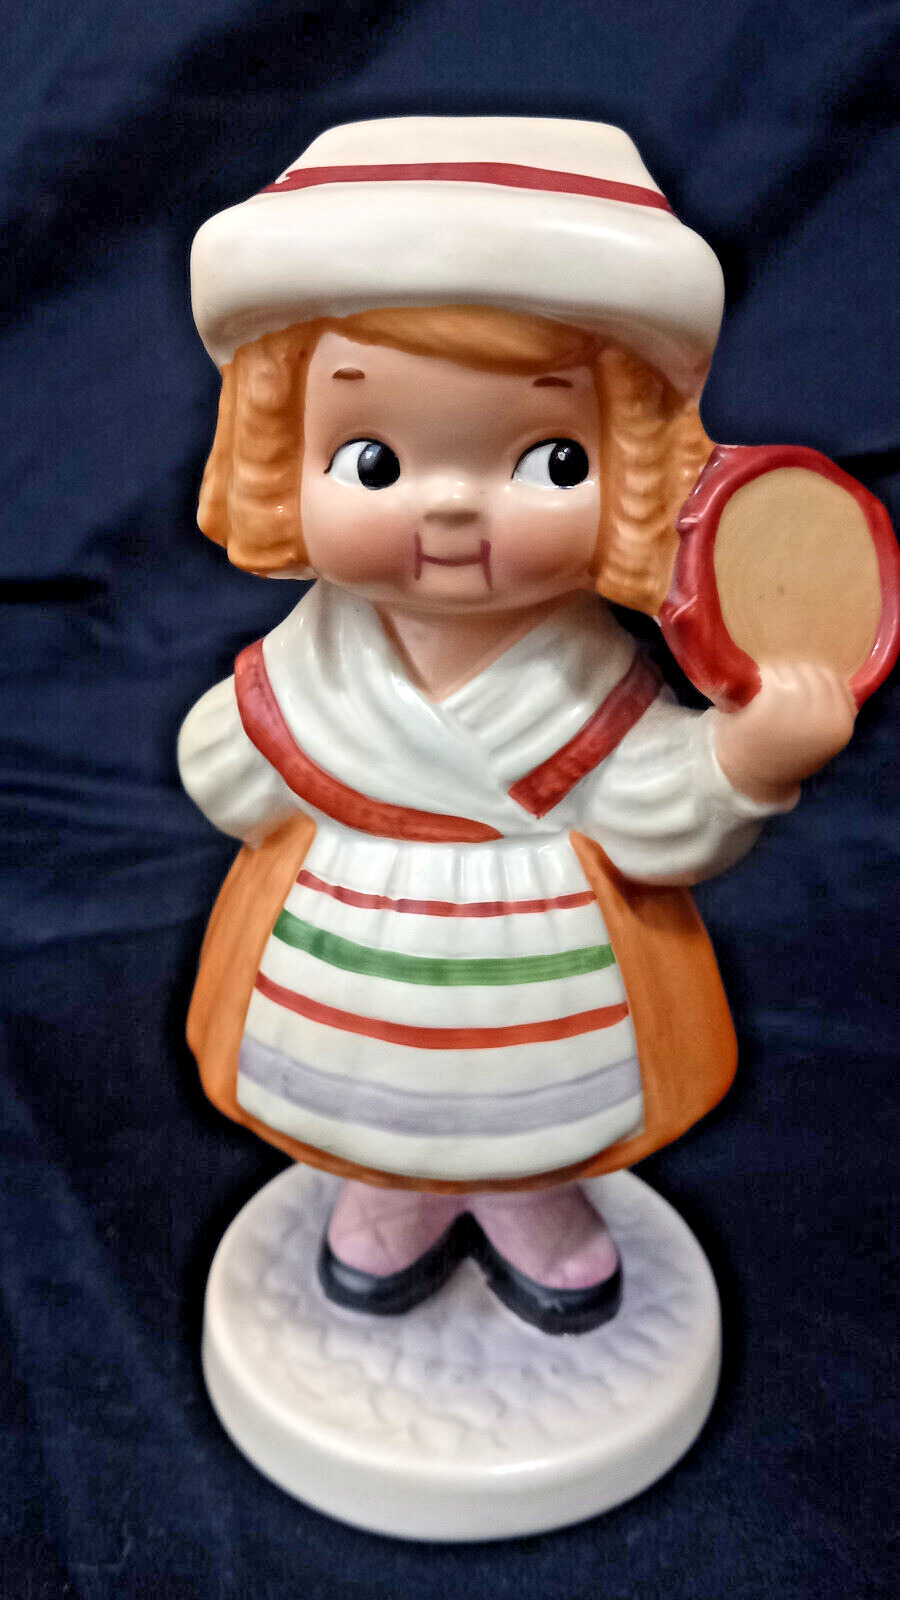 Vintage Goebel Hummel Figurine - Dollie Dingle in Italy - 1981 W Germany